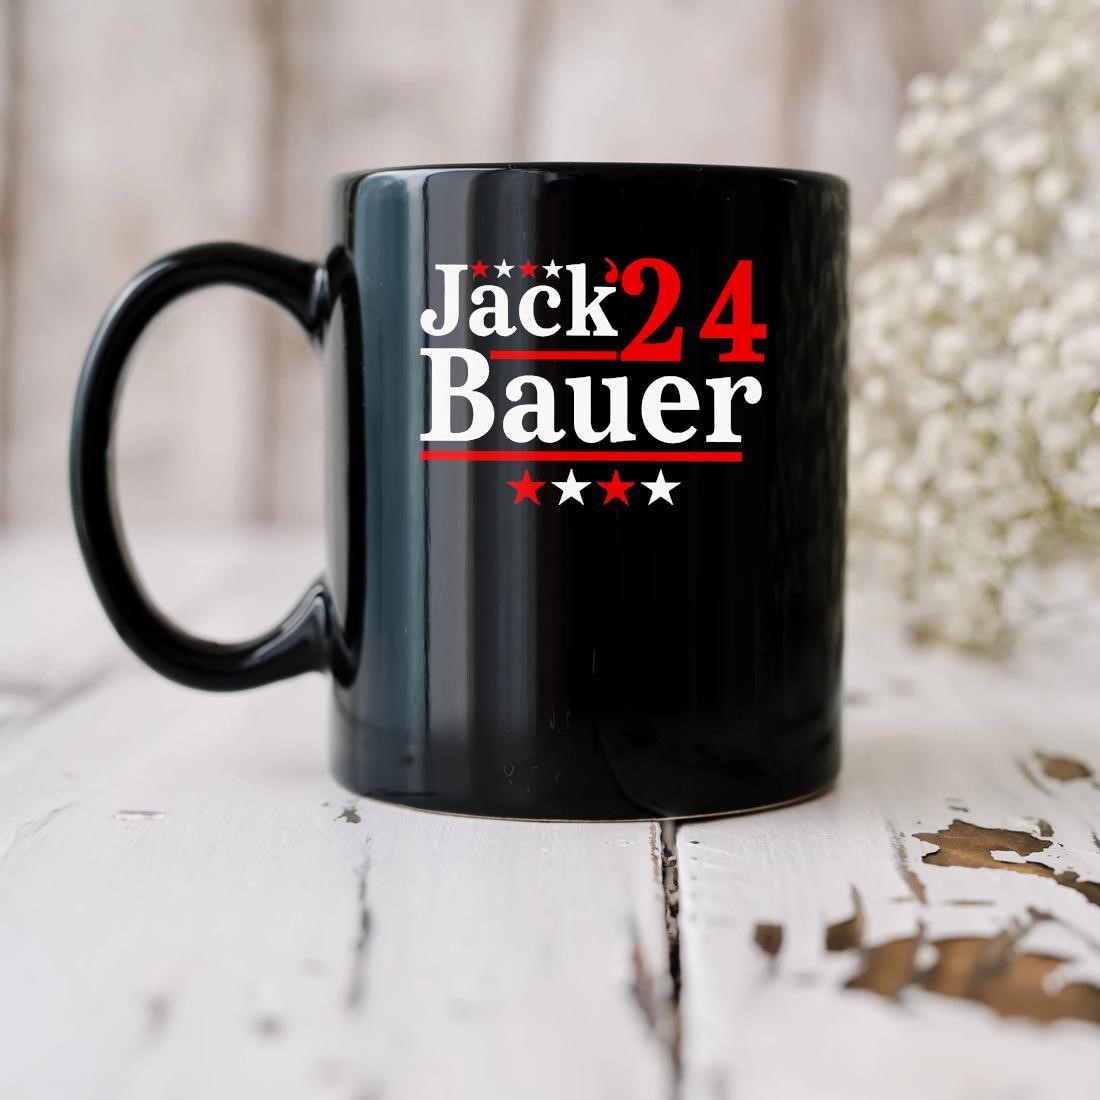 Official Jack Bauer 24 Mug biu.jpg